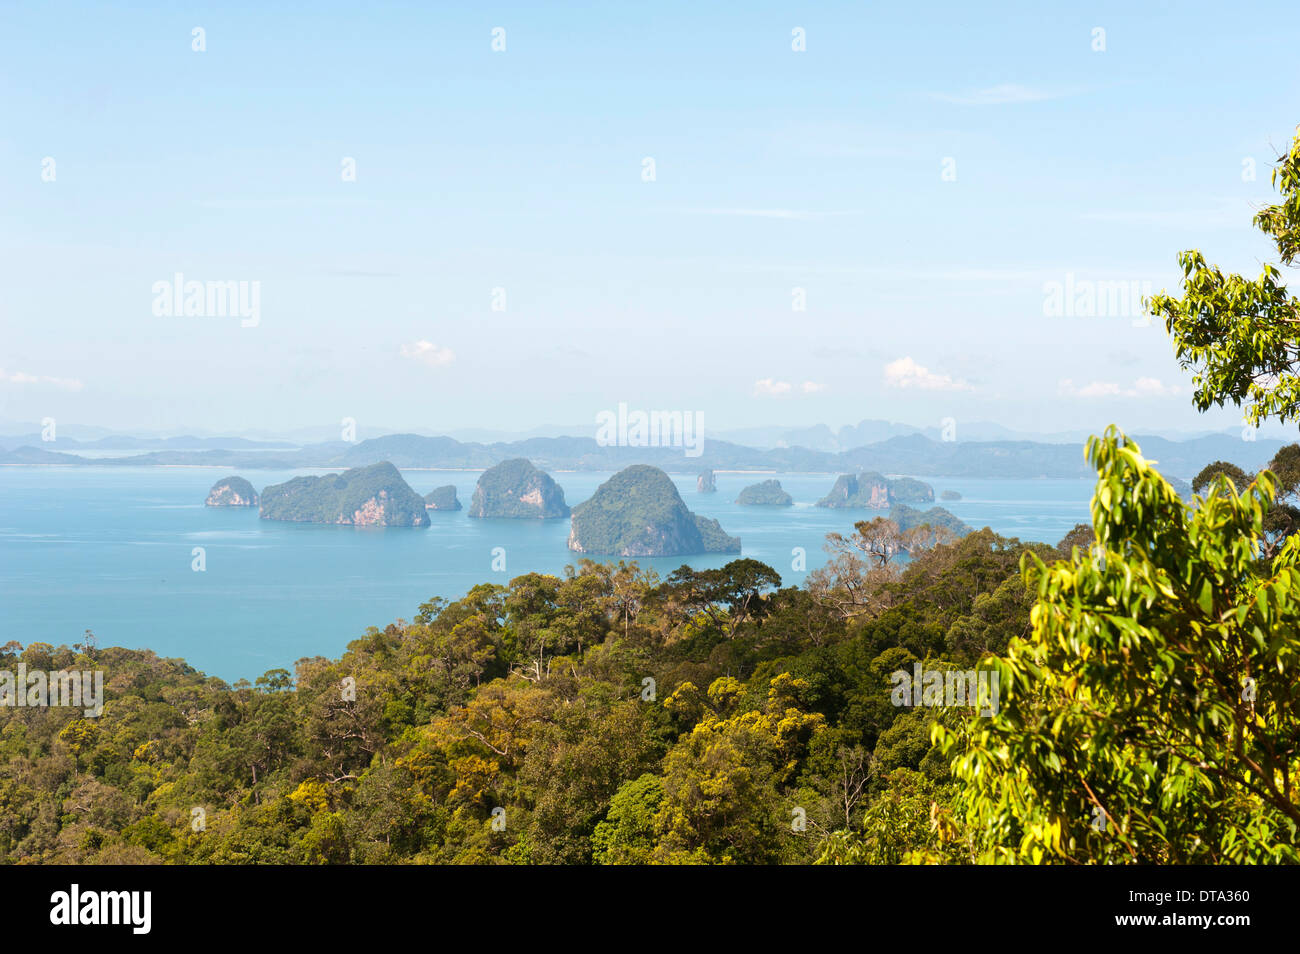 Bewaldeten Karst Inseln steigt aus dem Meer, Blick auf Bucht von Phang Nga von Snakehead Mountain, Andamanensee, Ao Nang, Krabi Provinz Stockfoto